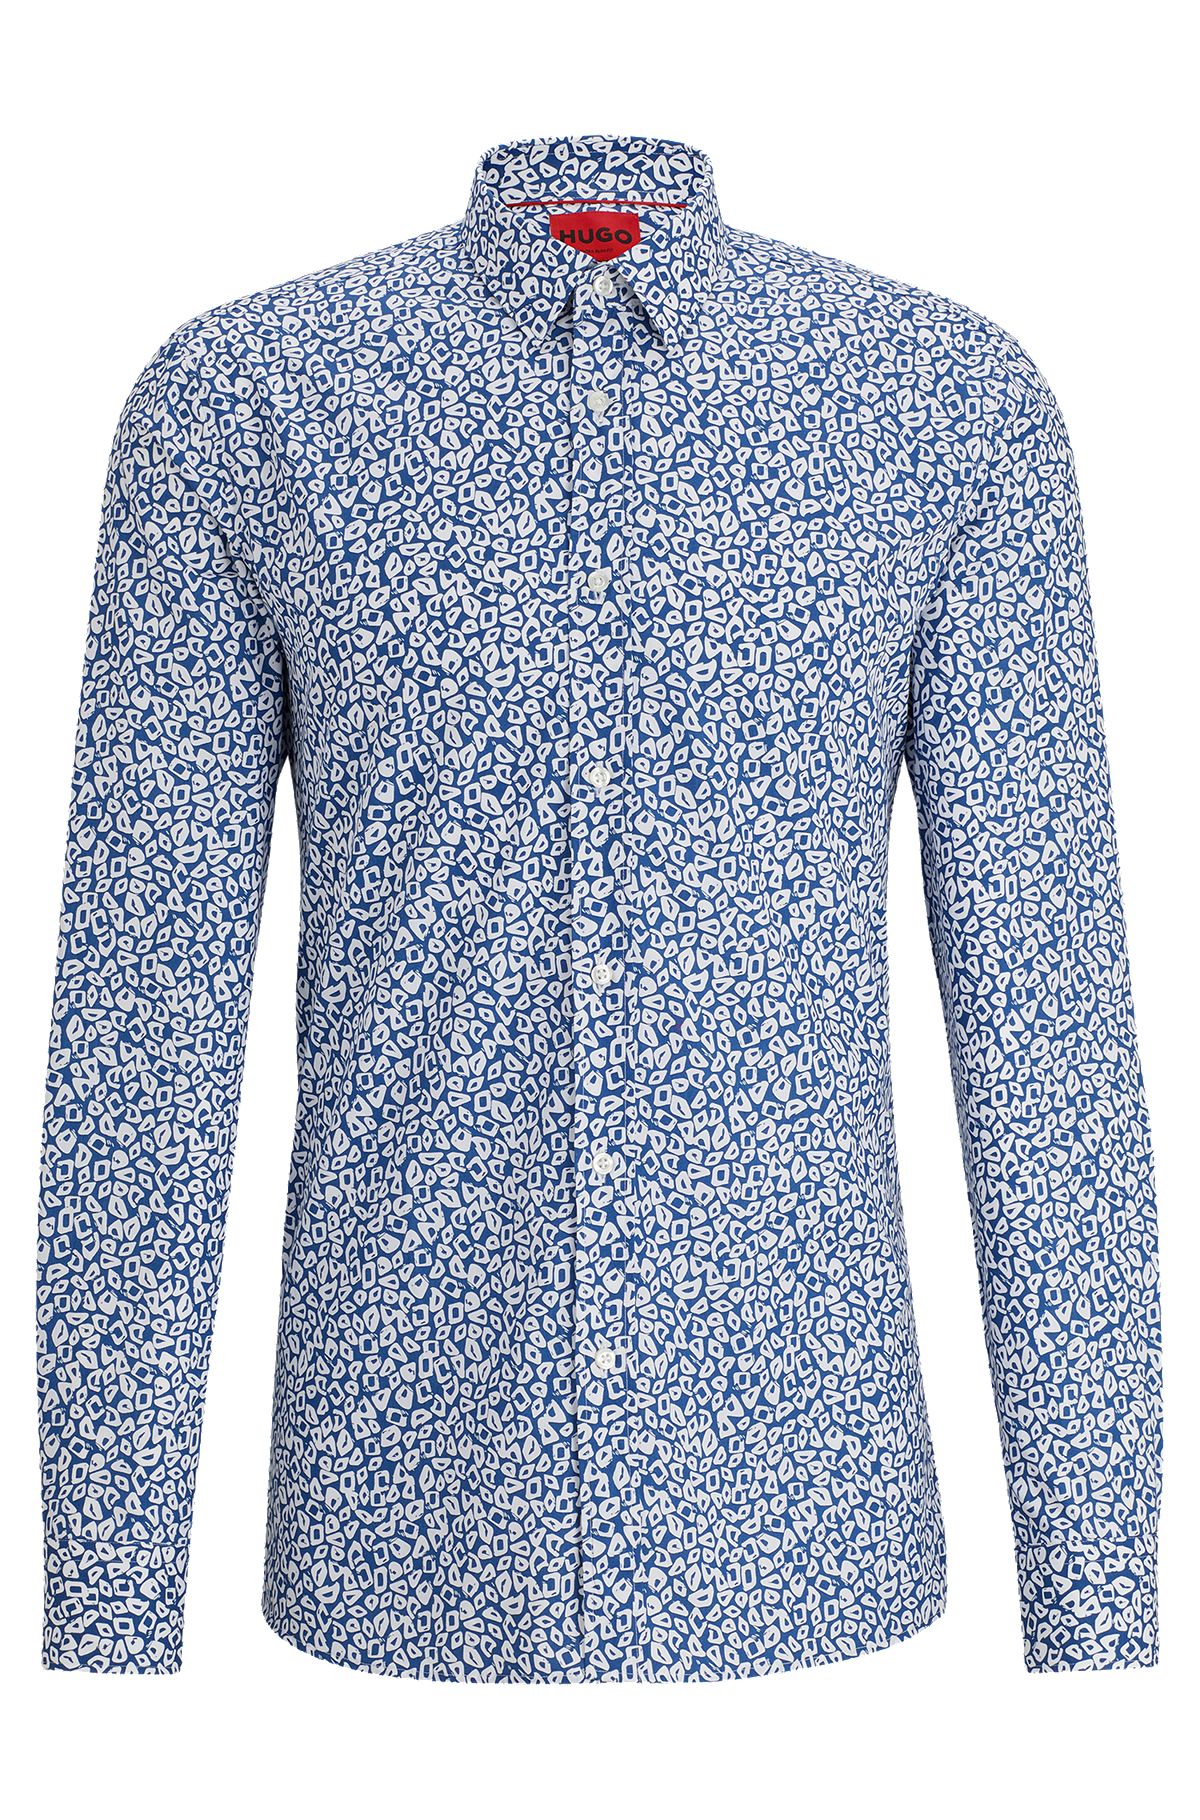 Extra-slim-fit shirt in printed cotton poplin, Blue